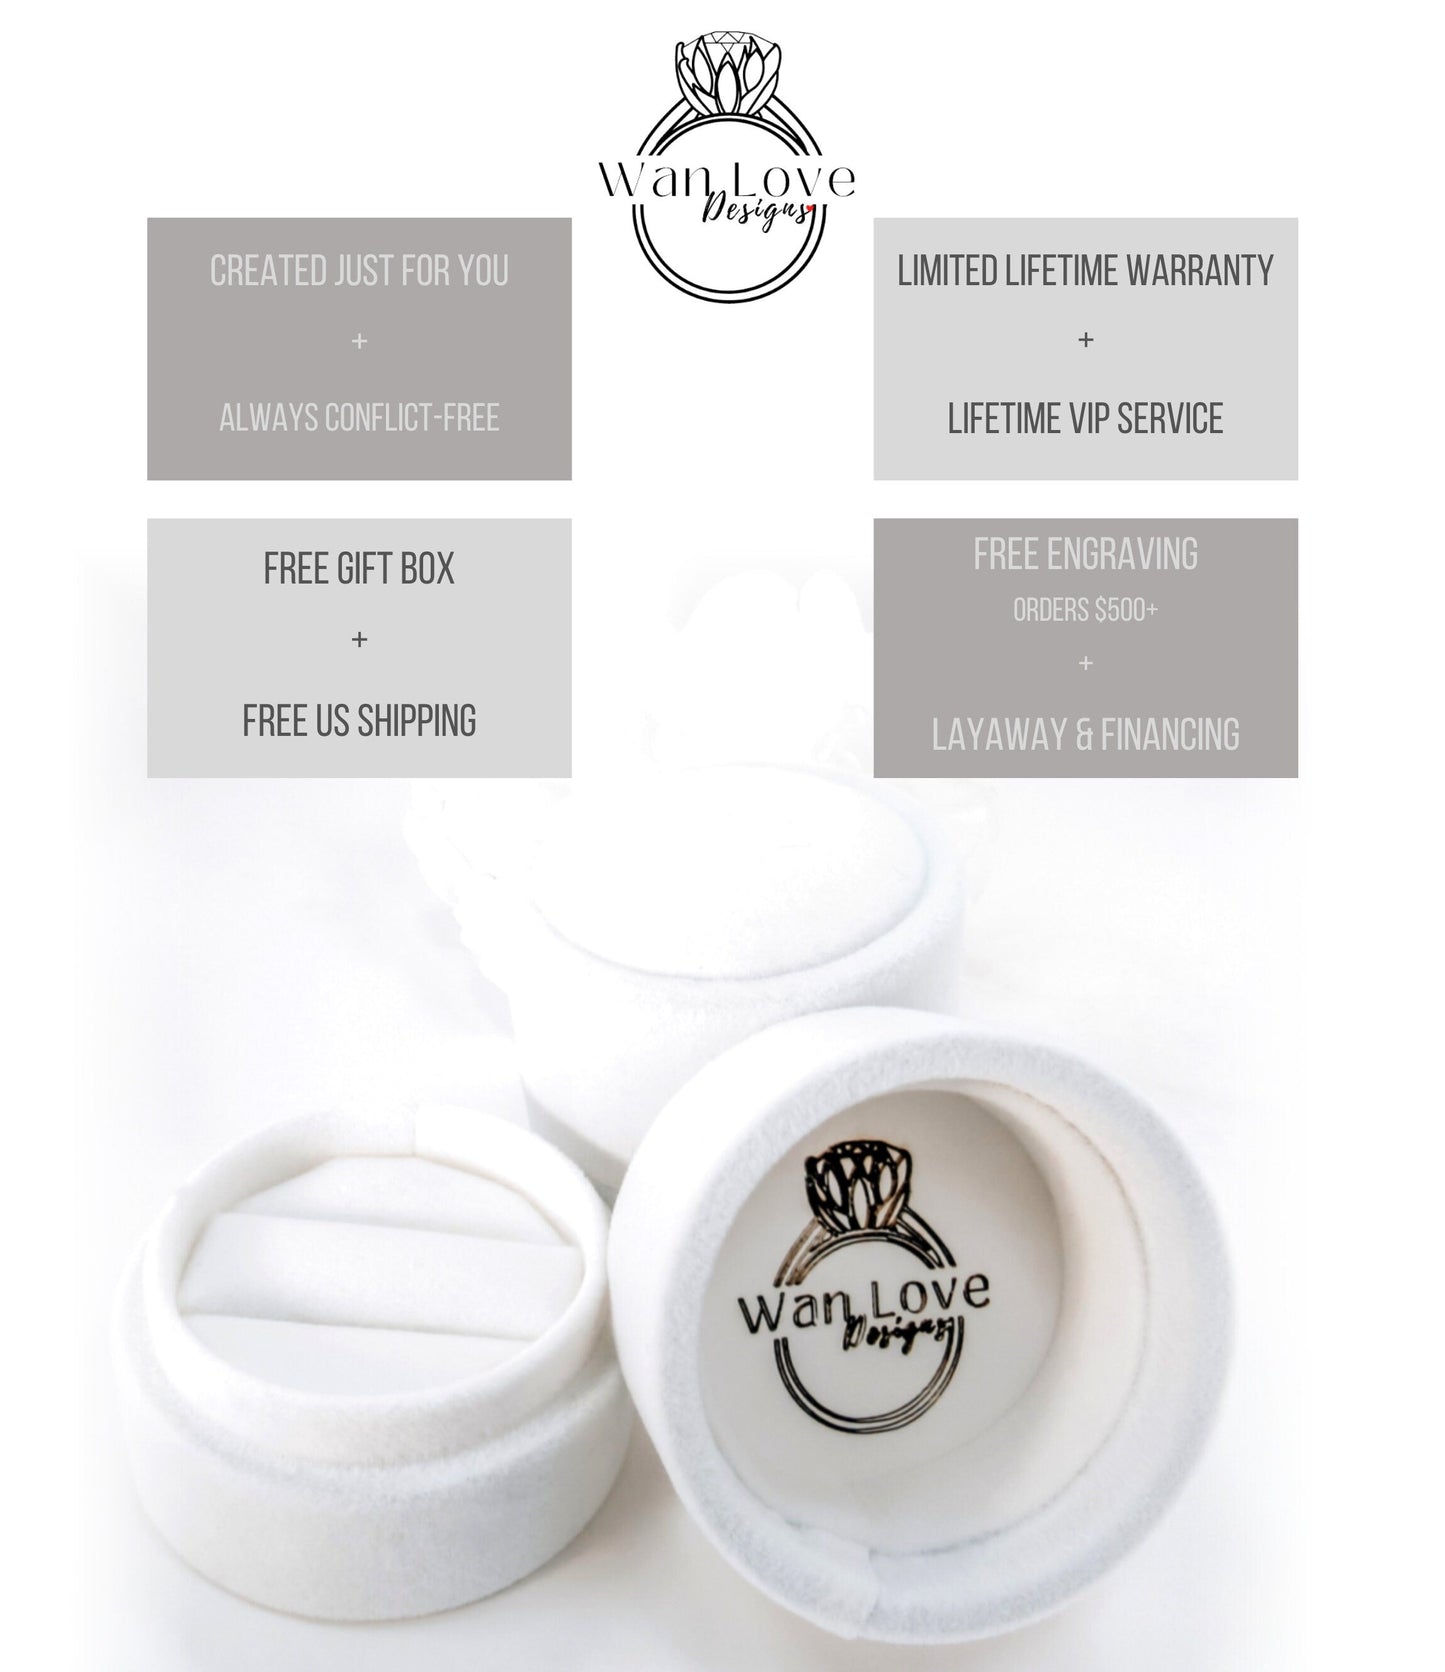 Labradorite & Diamond Cushion Halo Engagement Ring, Custom, Wedding, Anniversary Gift, Basket, Commitment, Proposal,Promise,Bridal Wan Love Designs